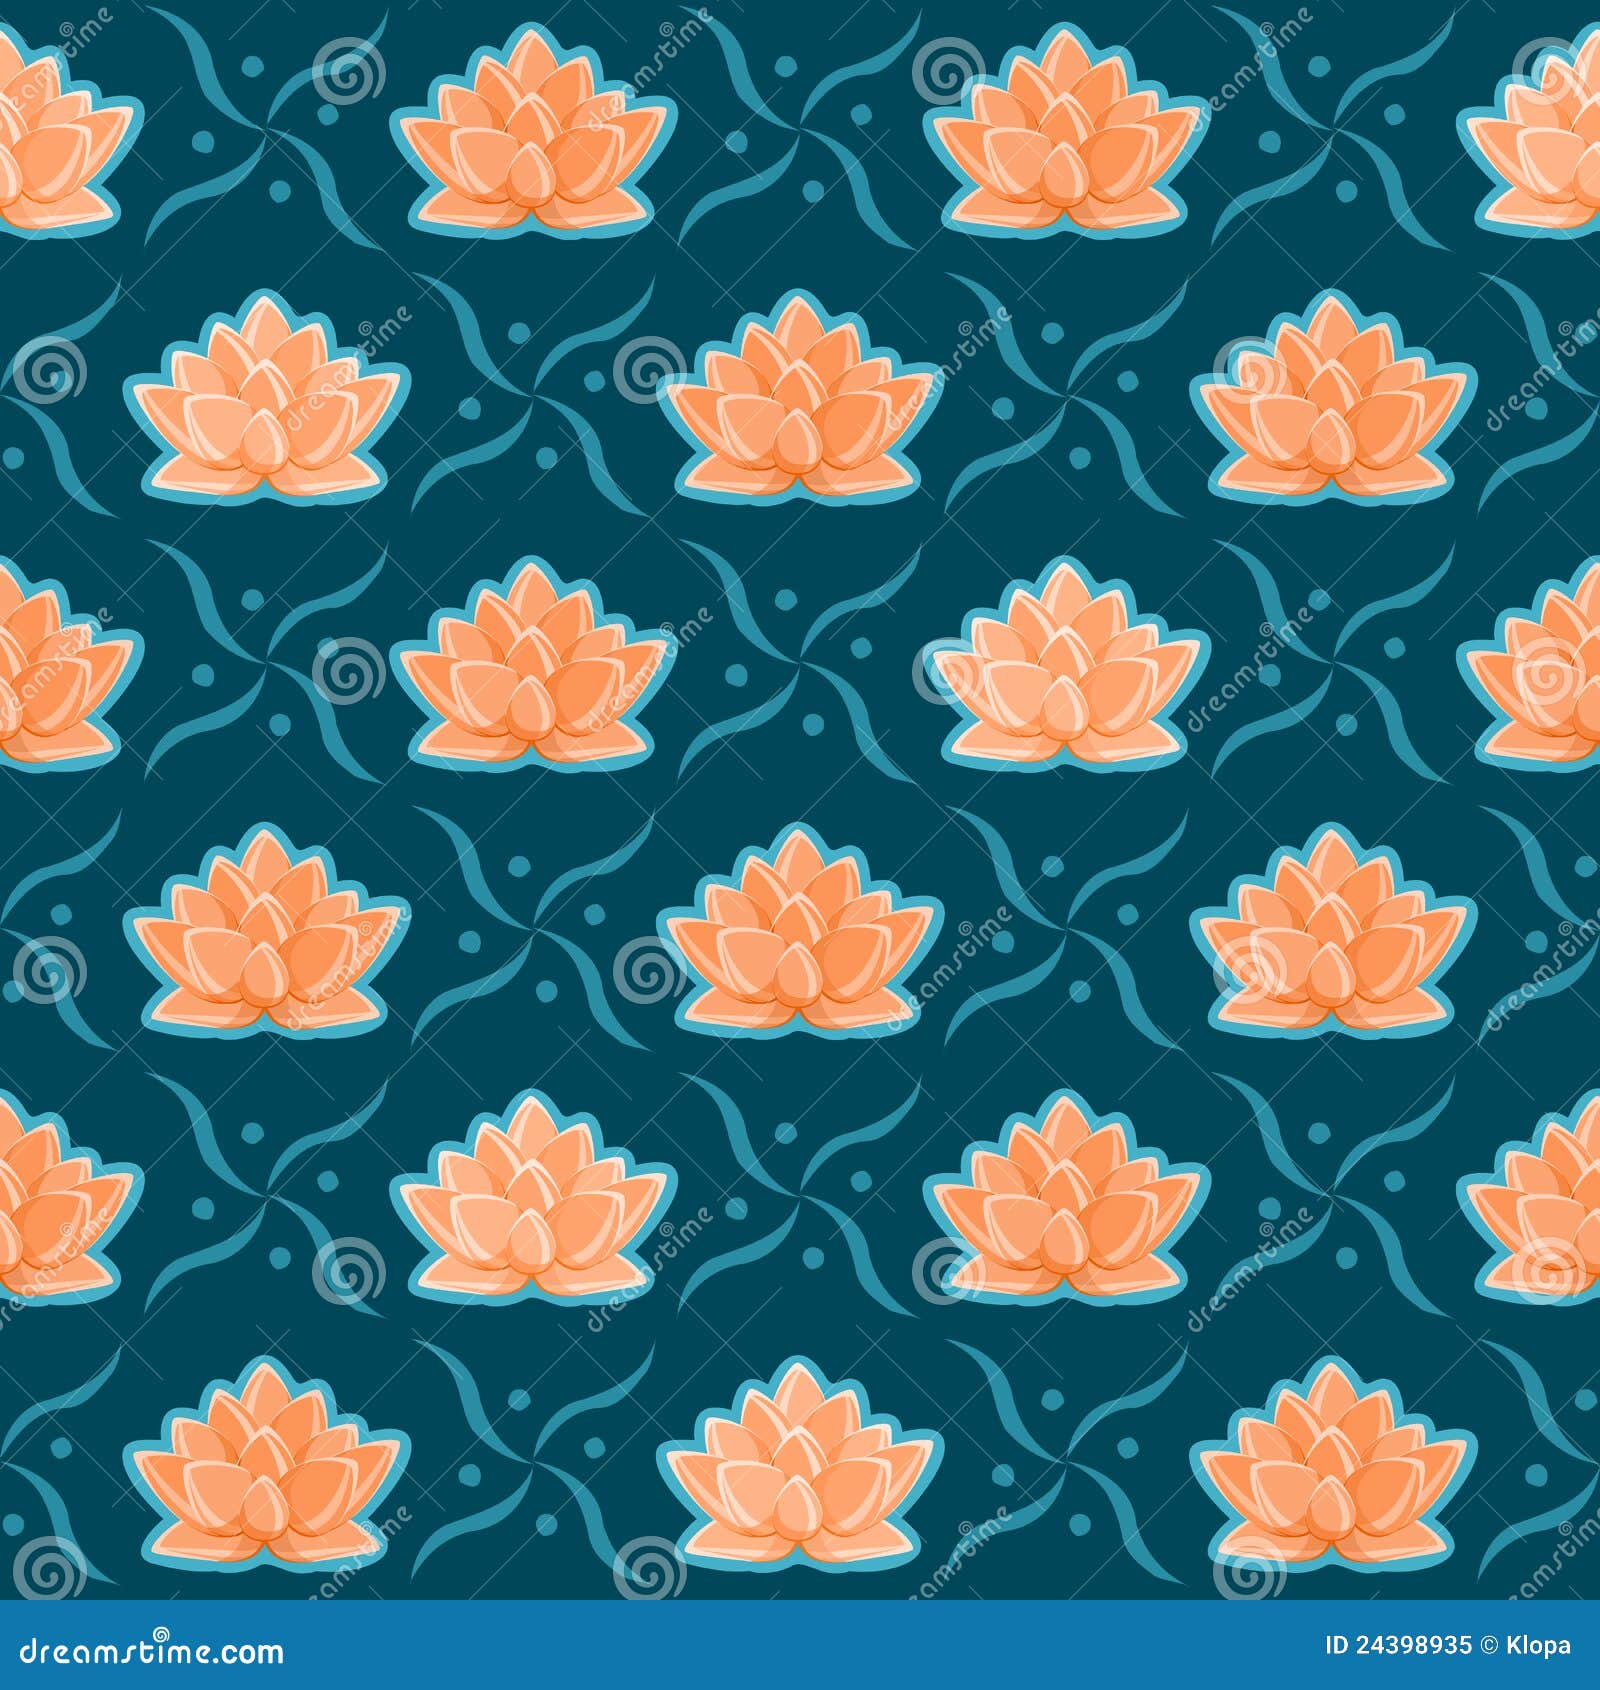 Lotus Flower Seamless Pattern Stock Vector - Illustration ...